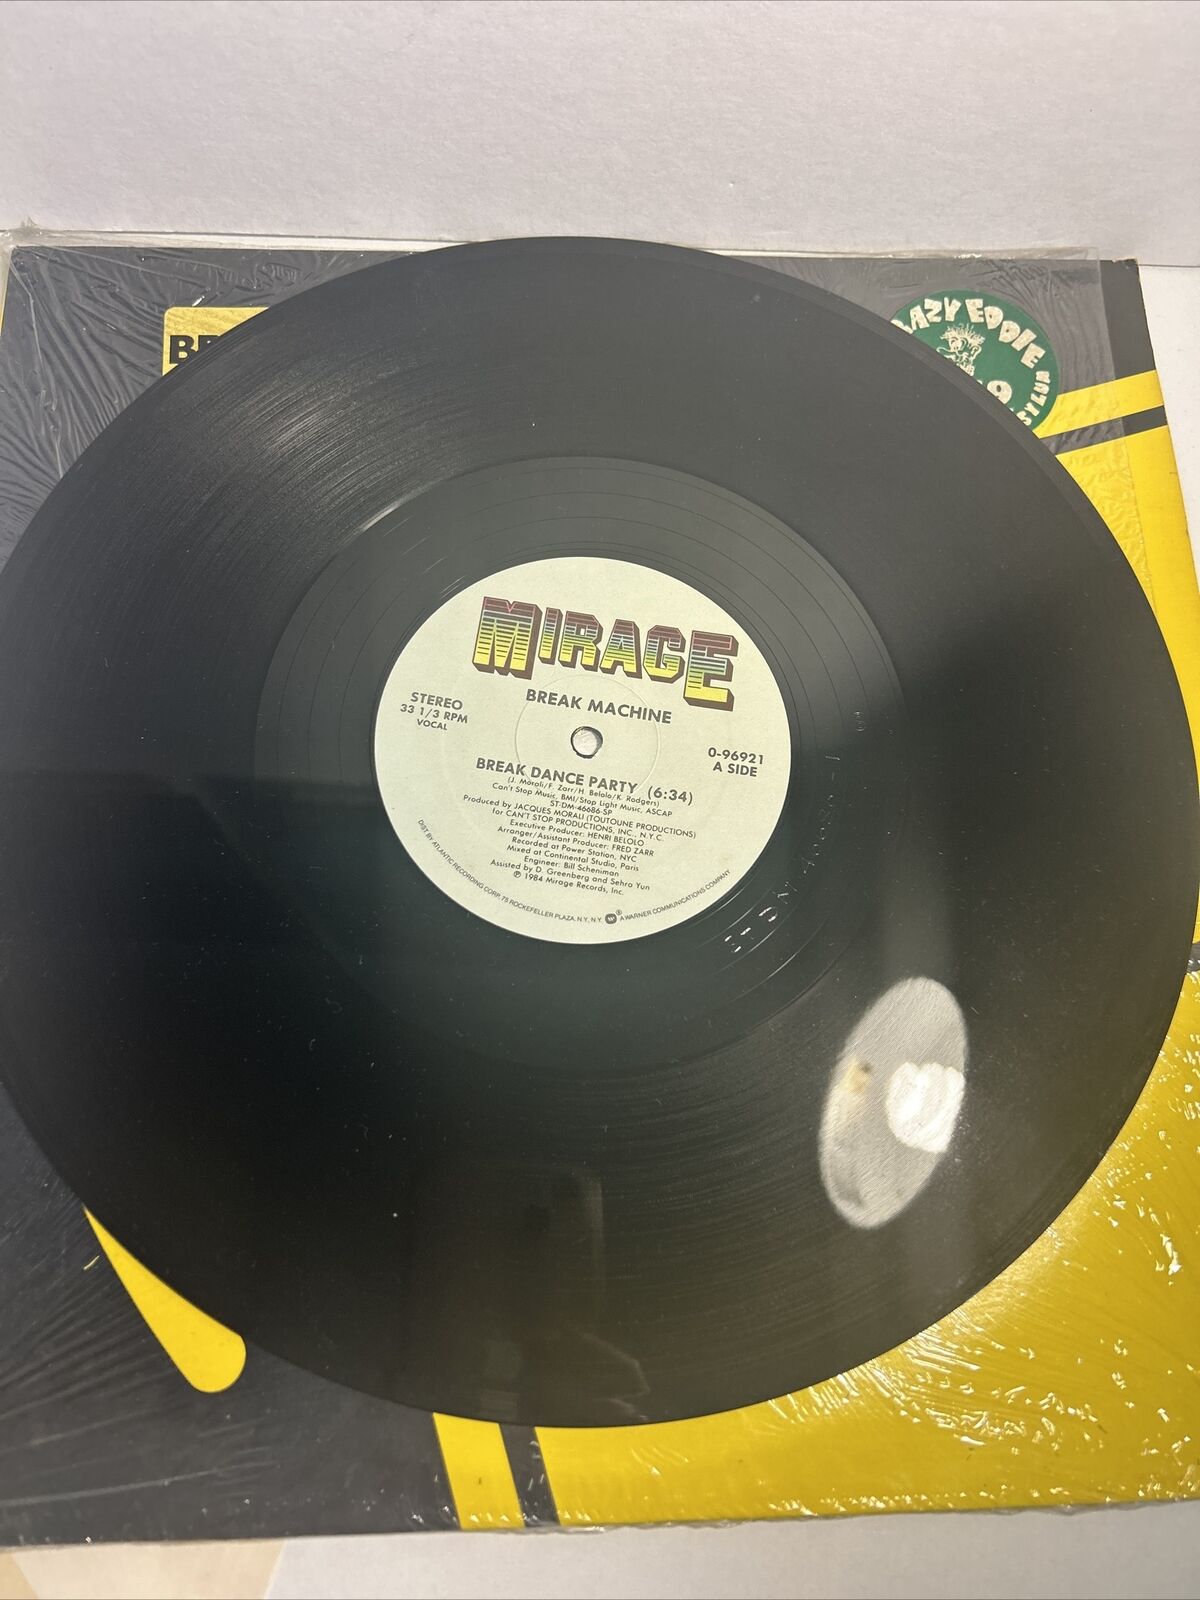 Break Machine - Break Dance Party 1984-12’ Single Promotional Record - 0-96921